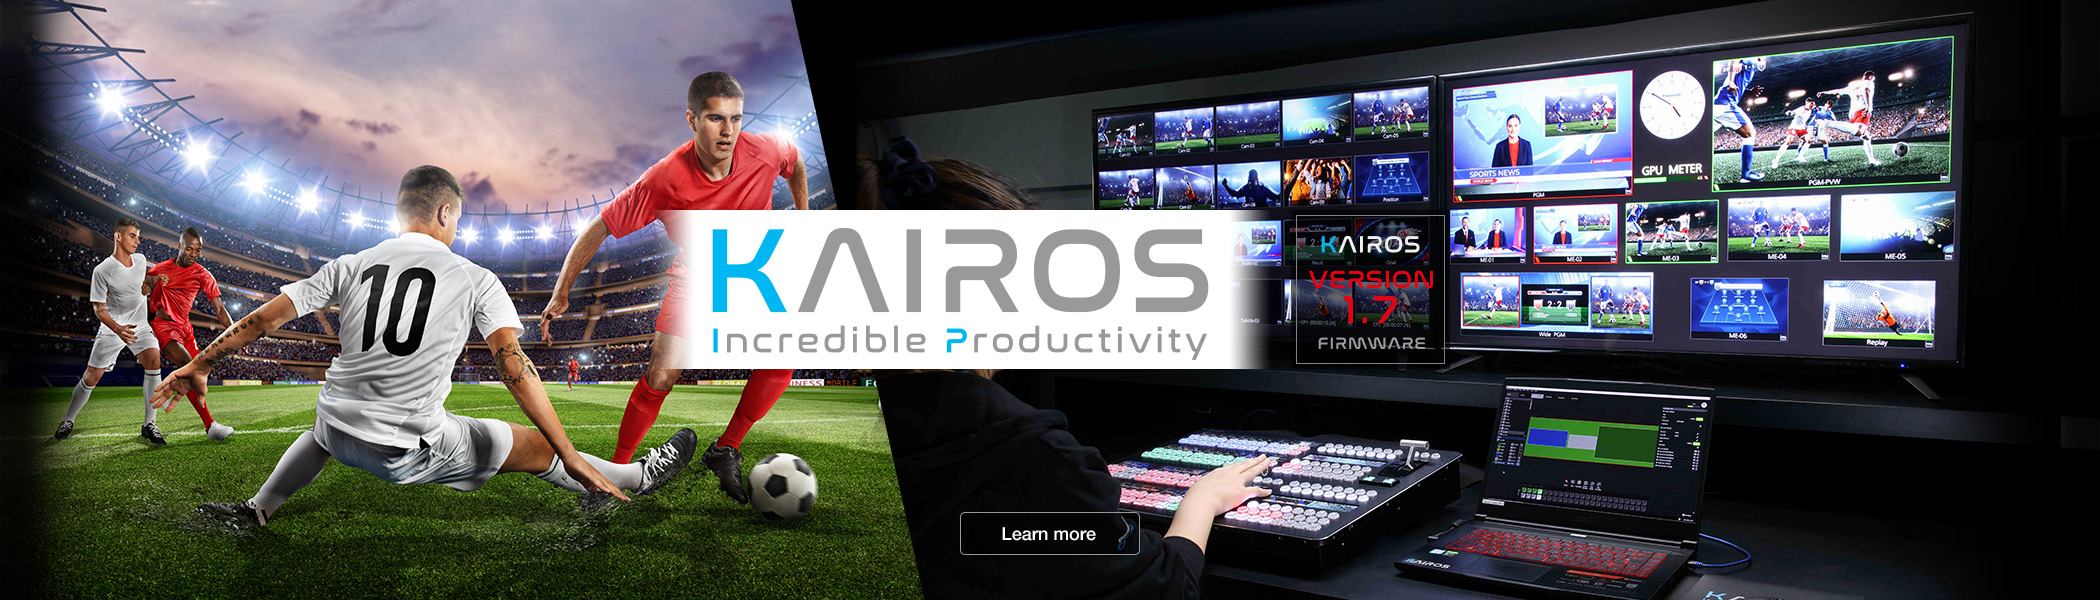 KAIROS Incredible Productivity KAIROS VERSION 1.6 FIRMWARE